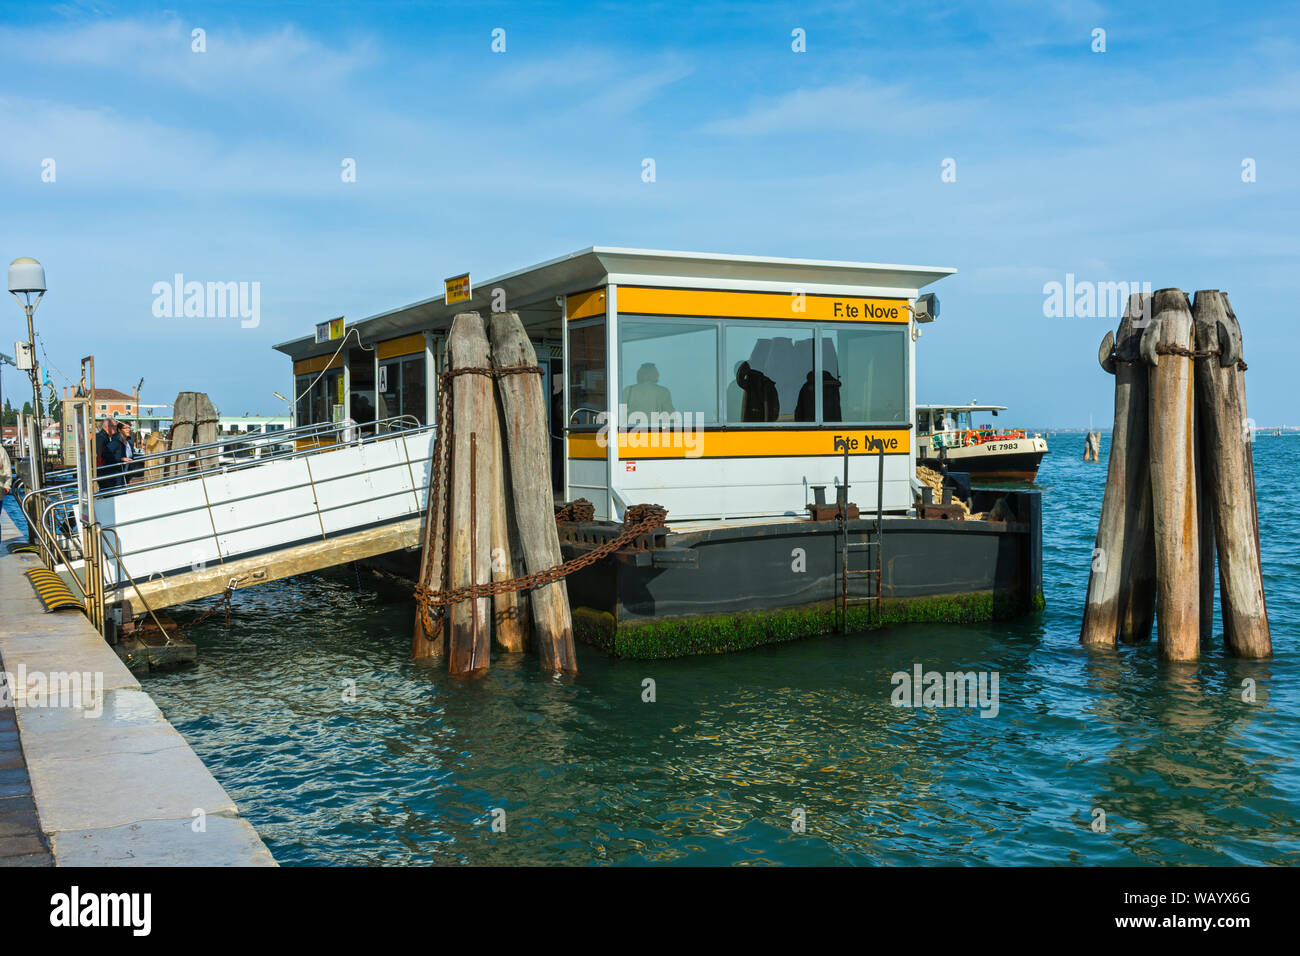 The Fondamente Nove Vaporetto water bus stop 'A', Venice, Italy Stock Photo  - Alamy